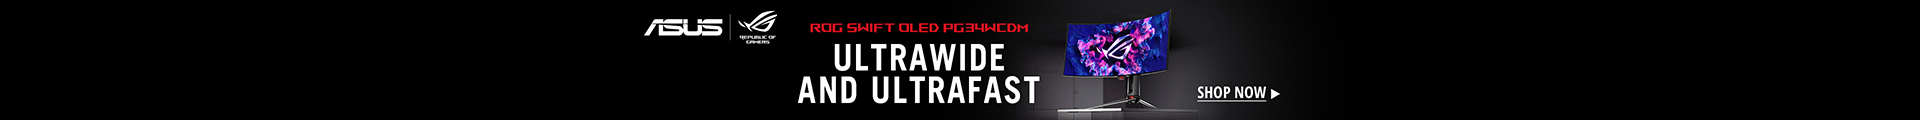 Ultrawide and ultrafast